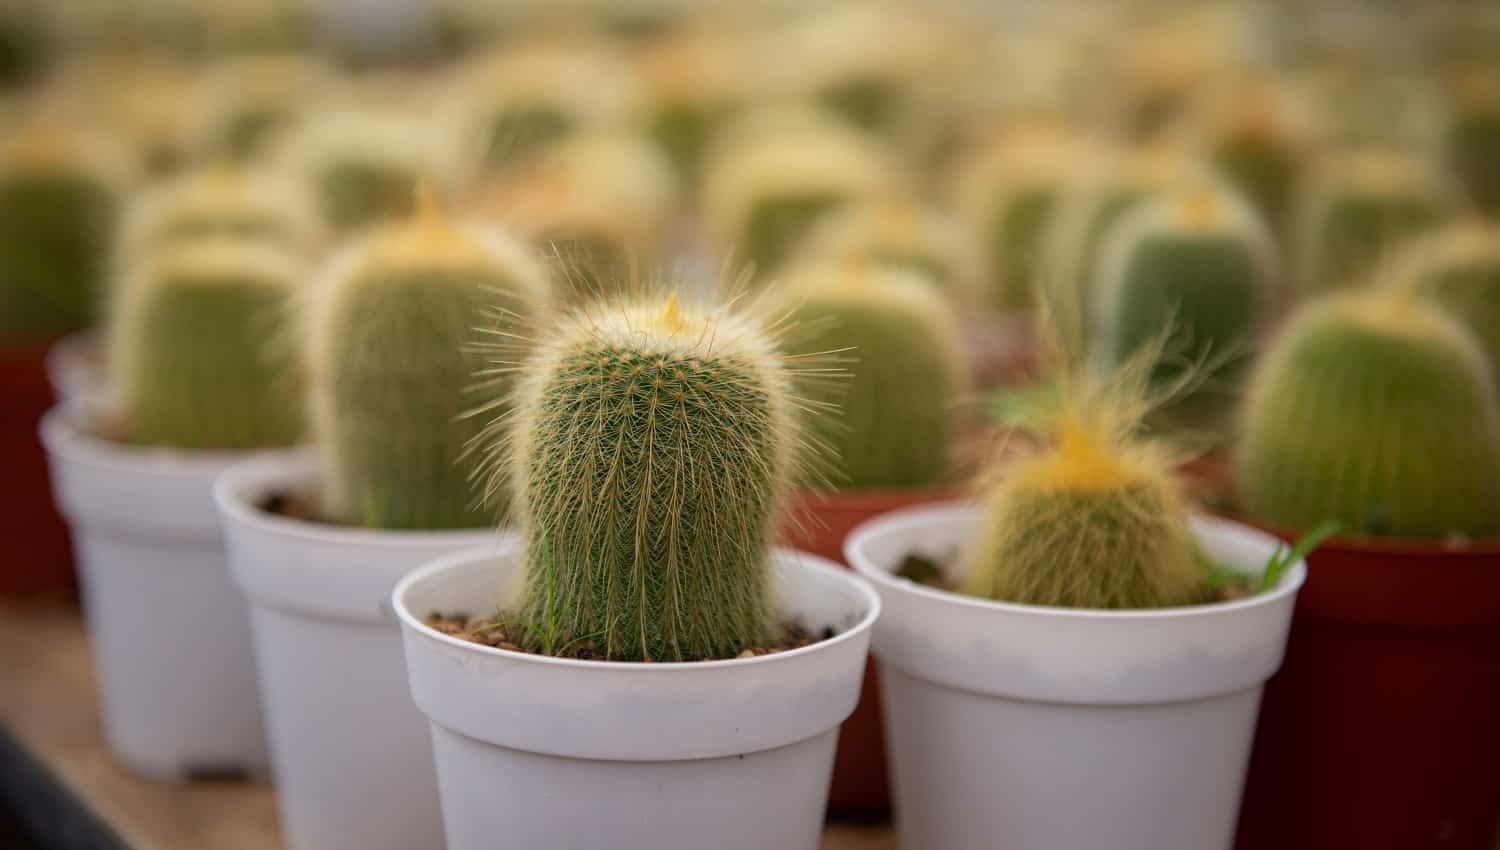 Cactus flower in a cultured farm